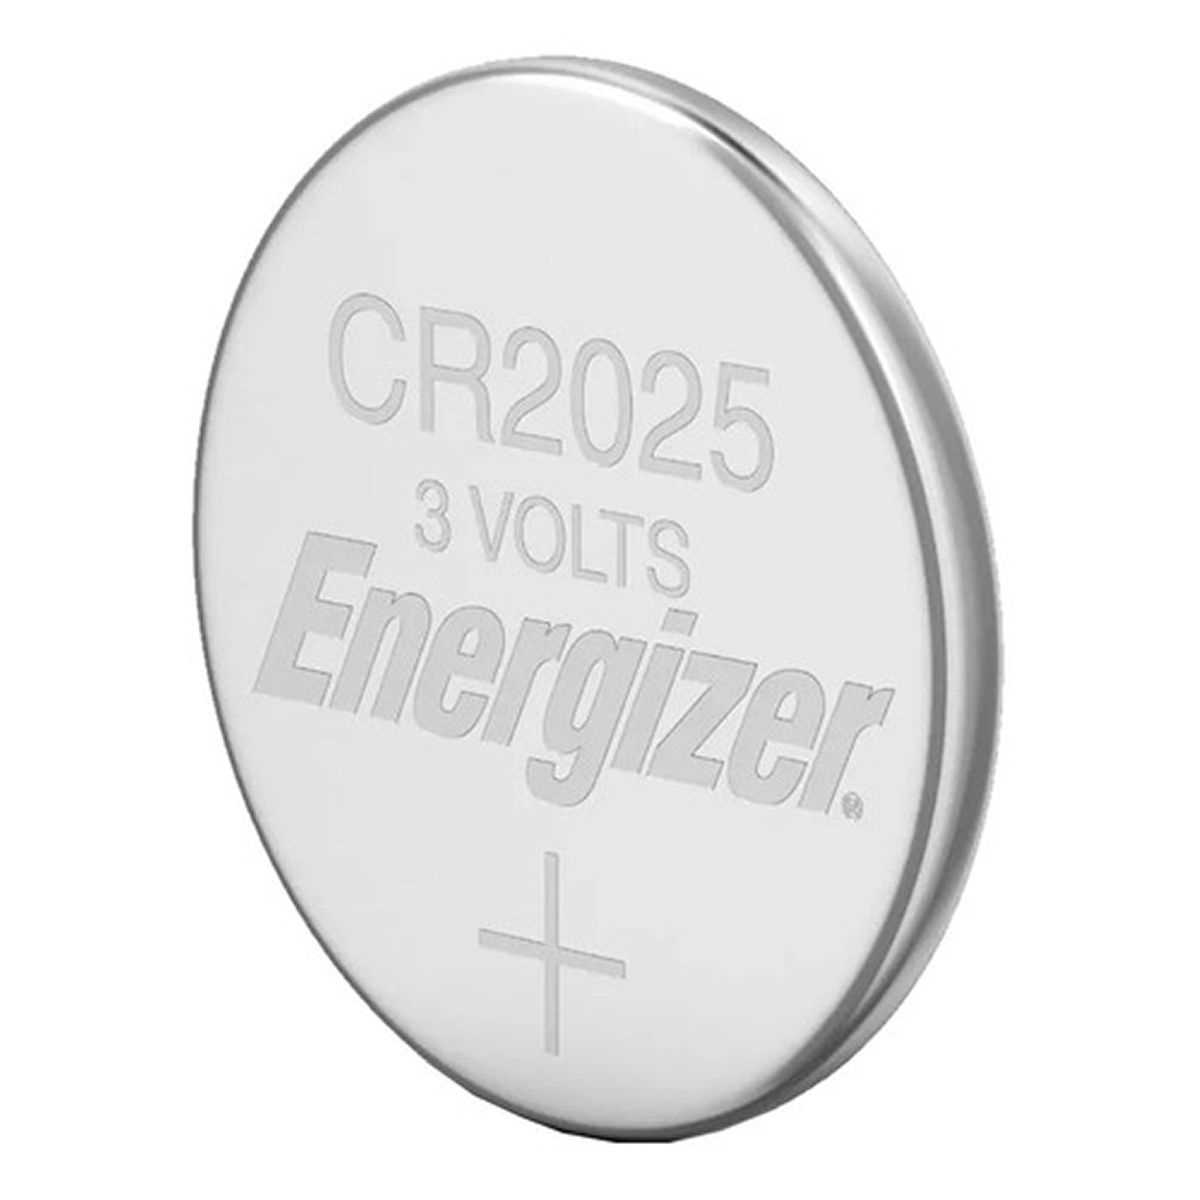 PILA ENERGIZER CR-2025